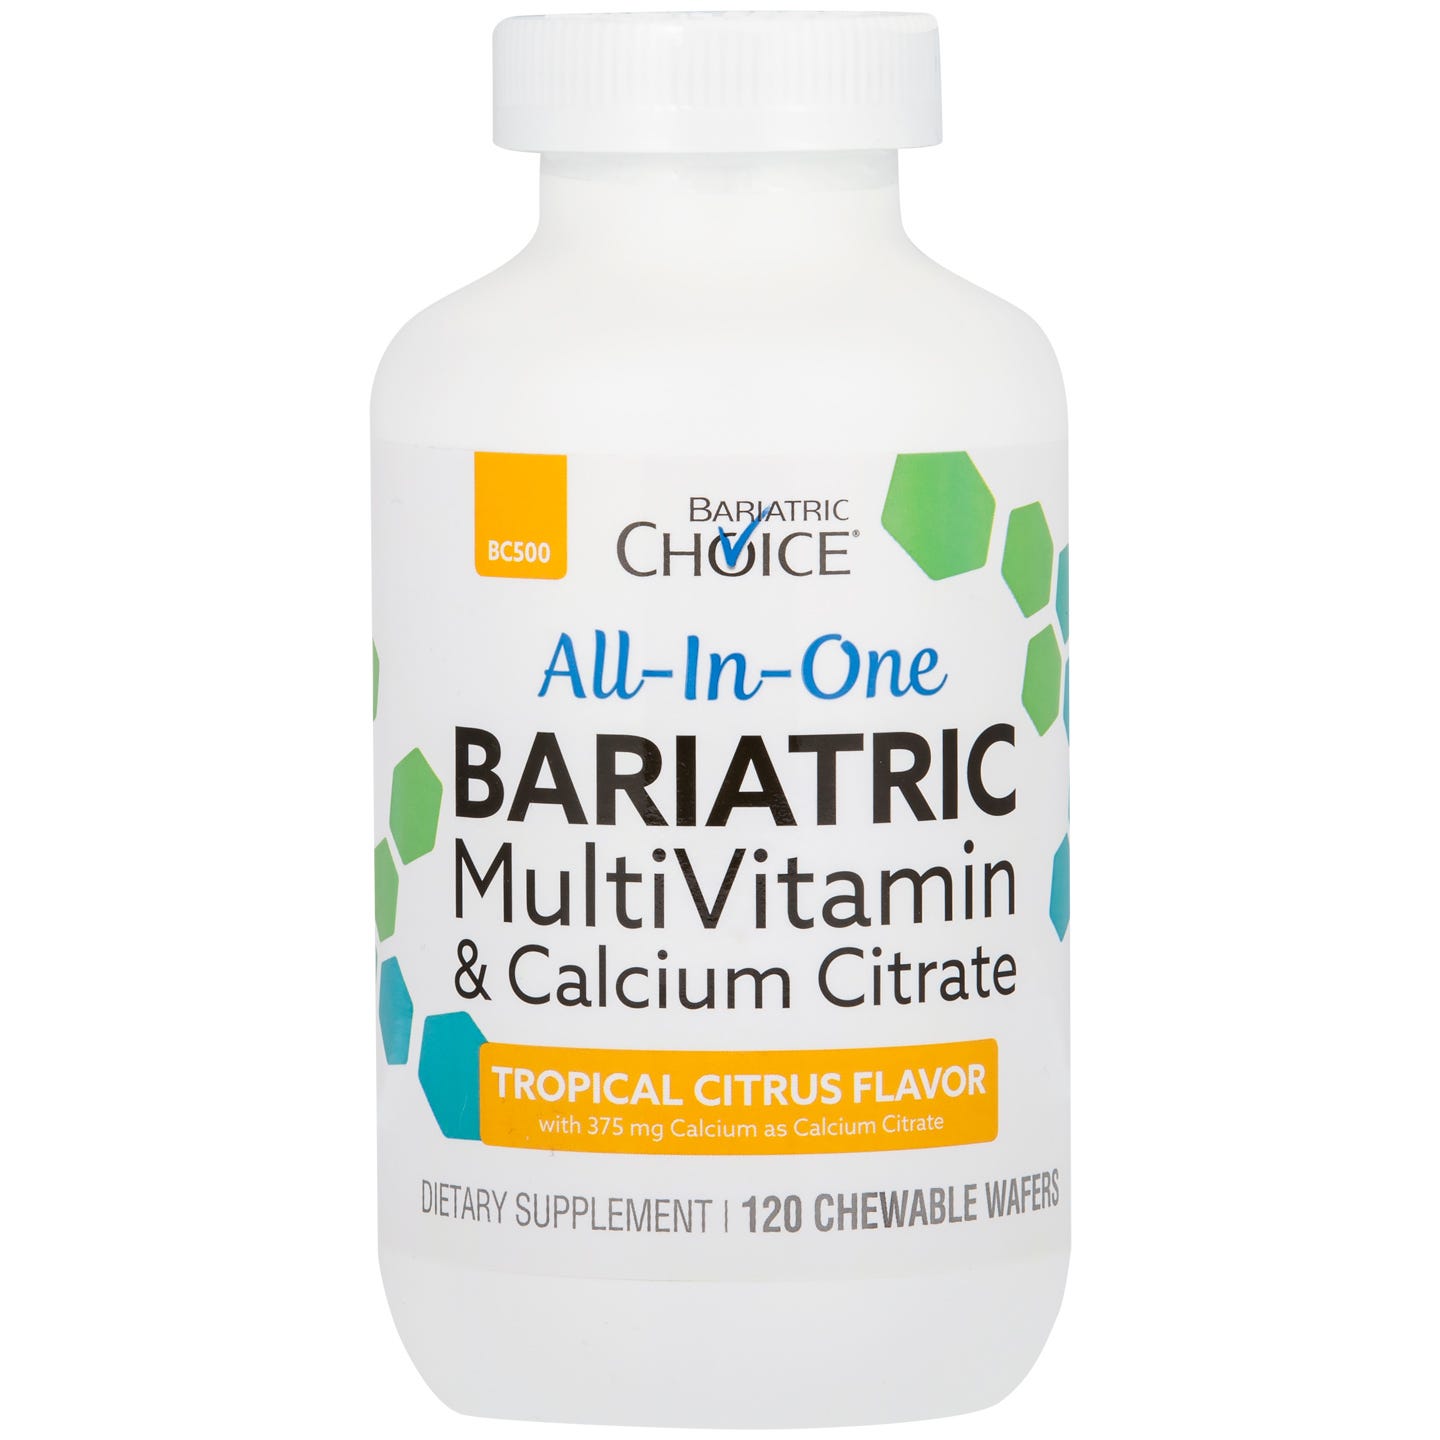 Vitamin For Bariatric